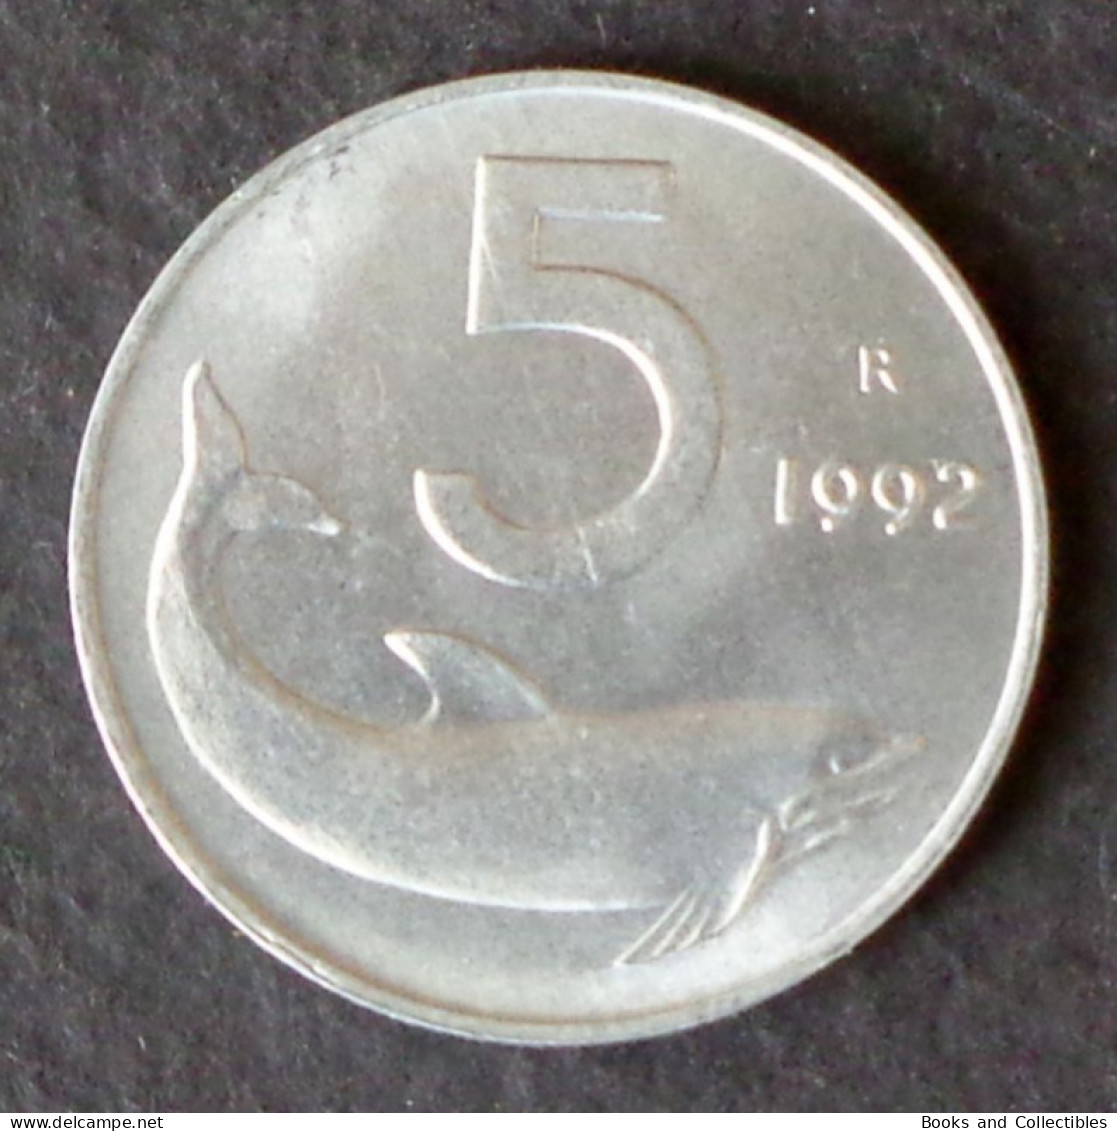 ITALY - 5 Lira 1992 - KM# 92 * Ref. 0197 - 5 Lire